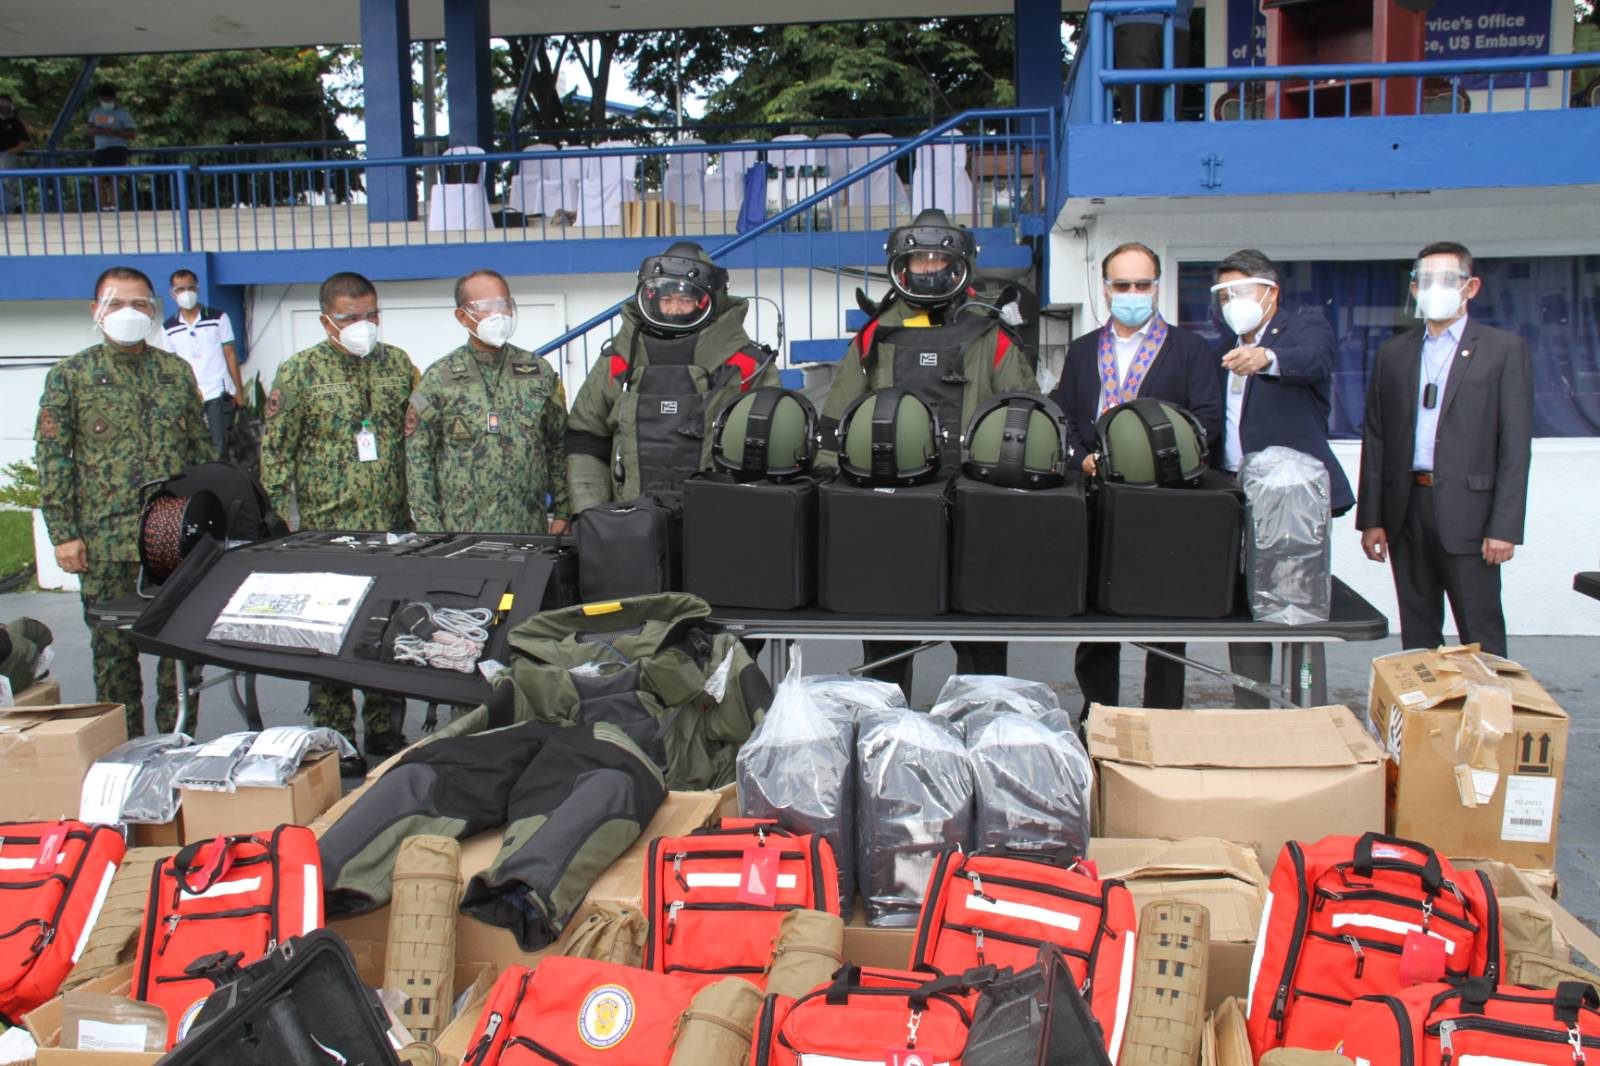 PNP receives anti-terrorism equipment from US